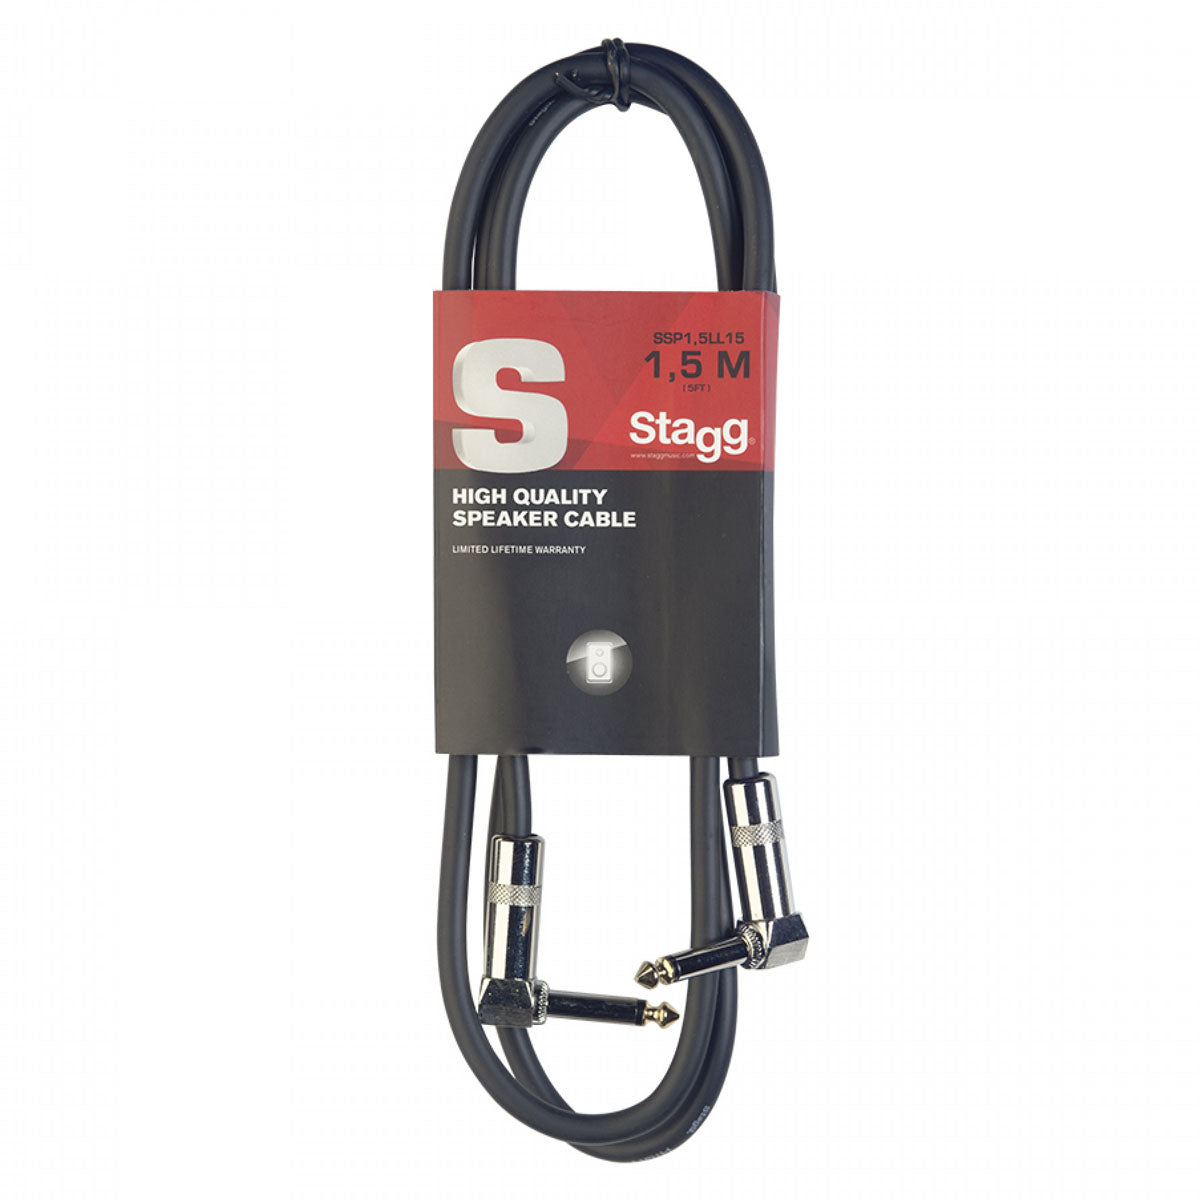 Stagg S-Series Speaker Cable - 1.5m Angled 1/4" Jack Plug to Angled 1/4" Jack Plug - 16GA